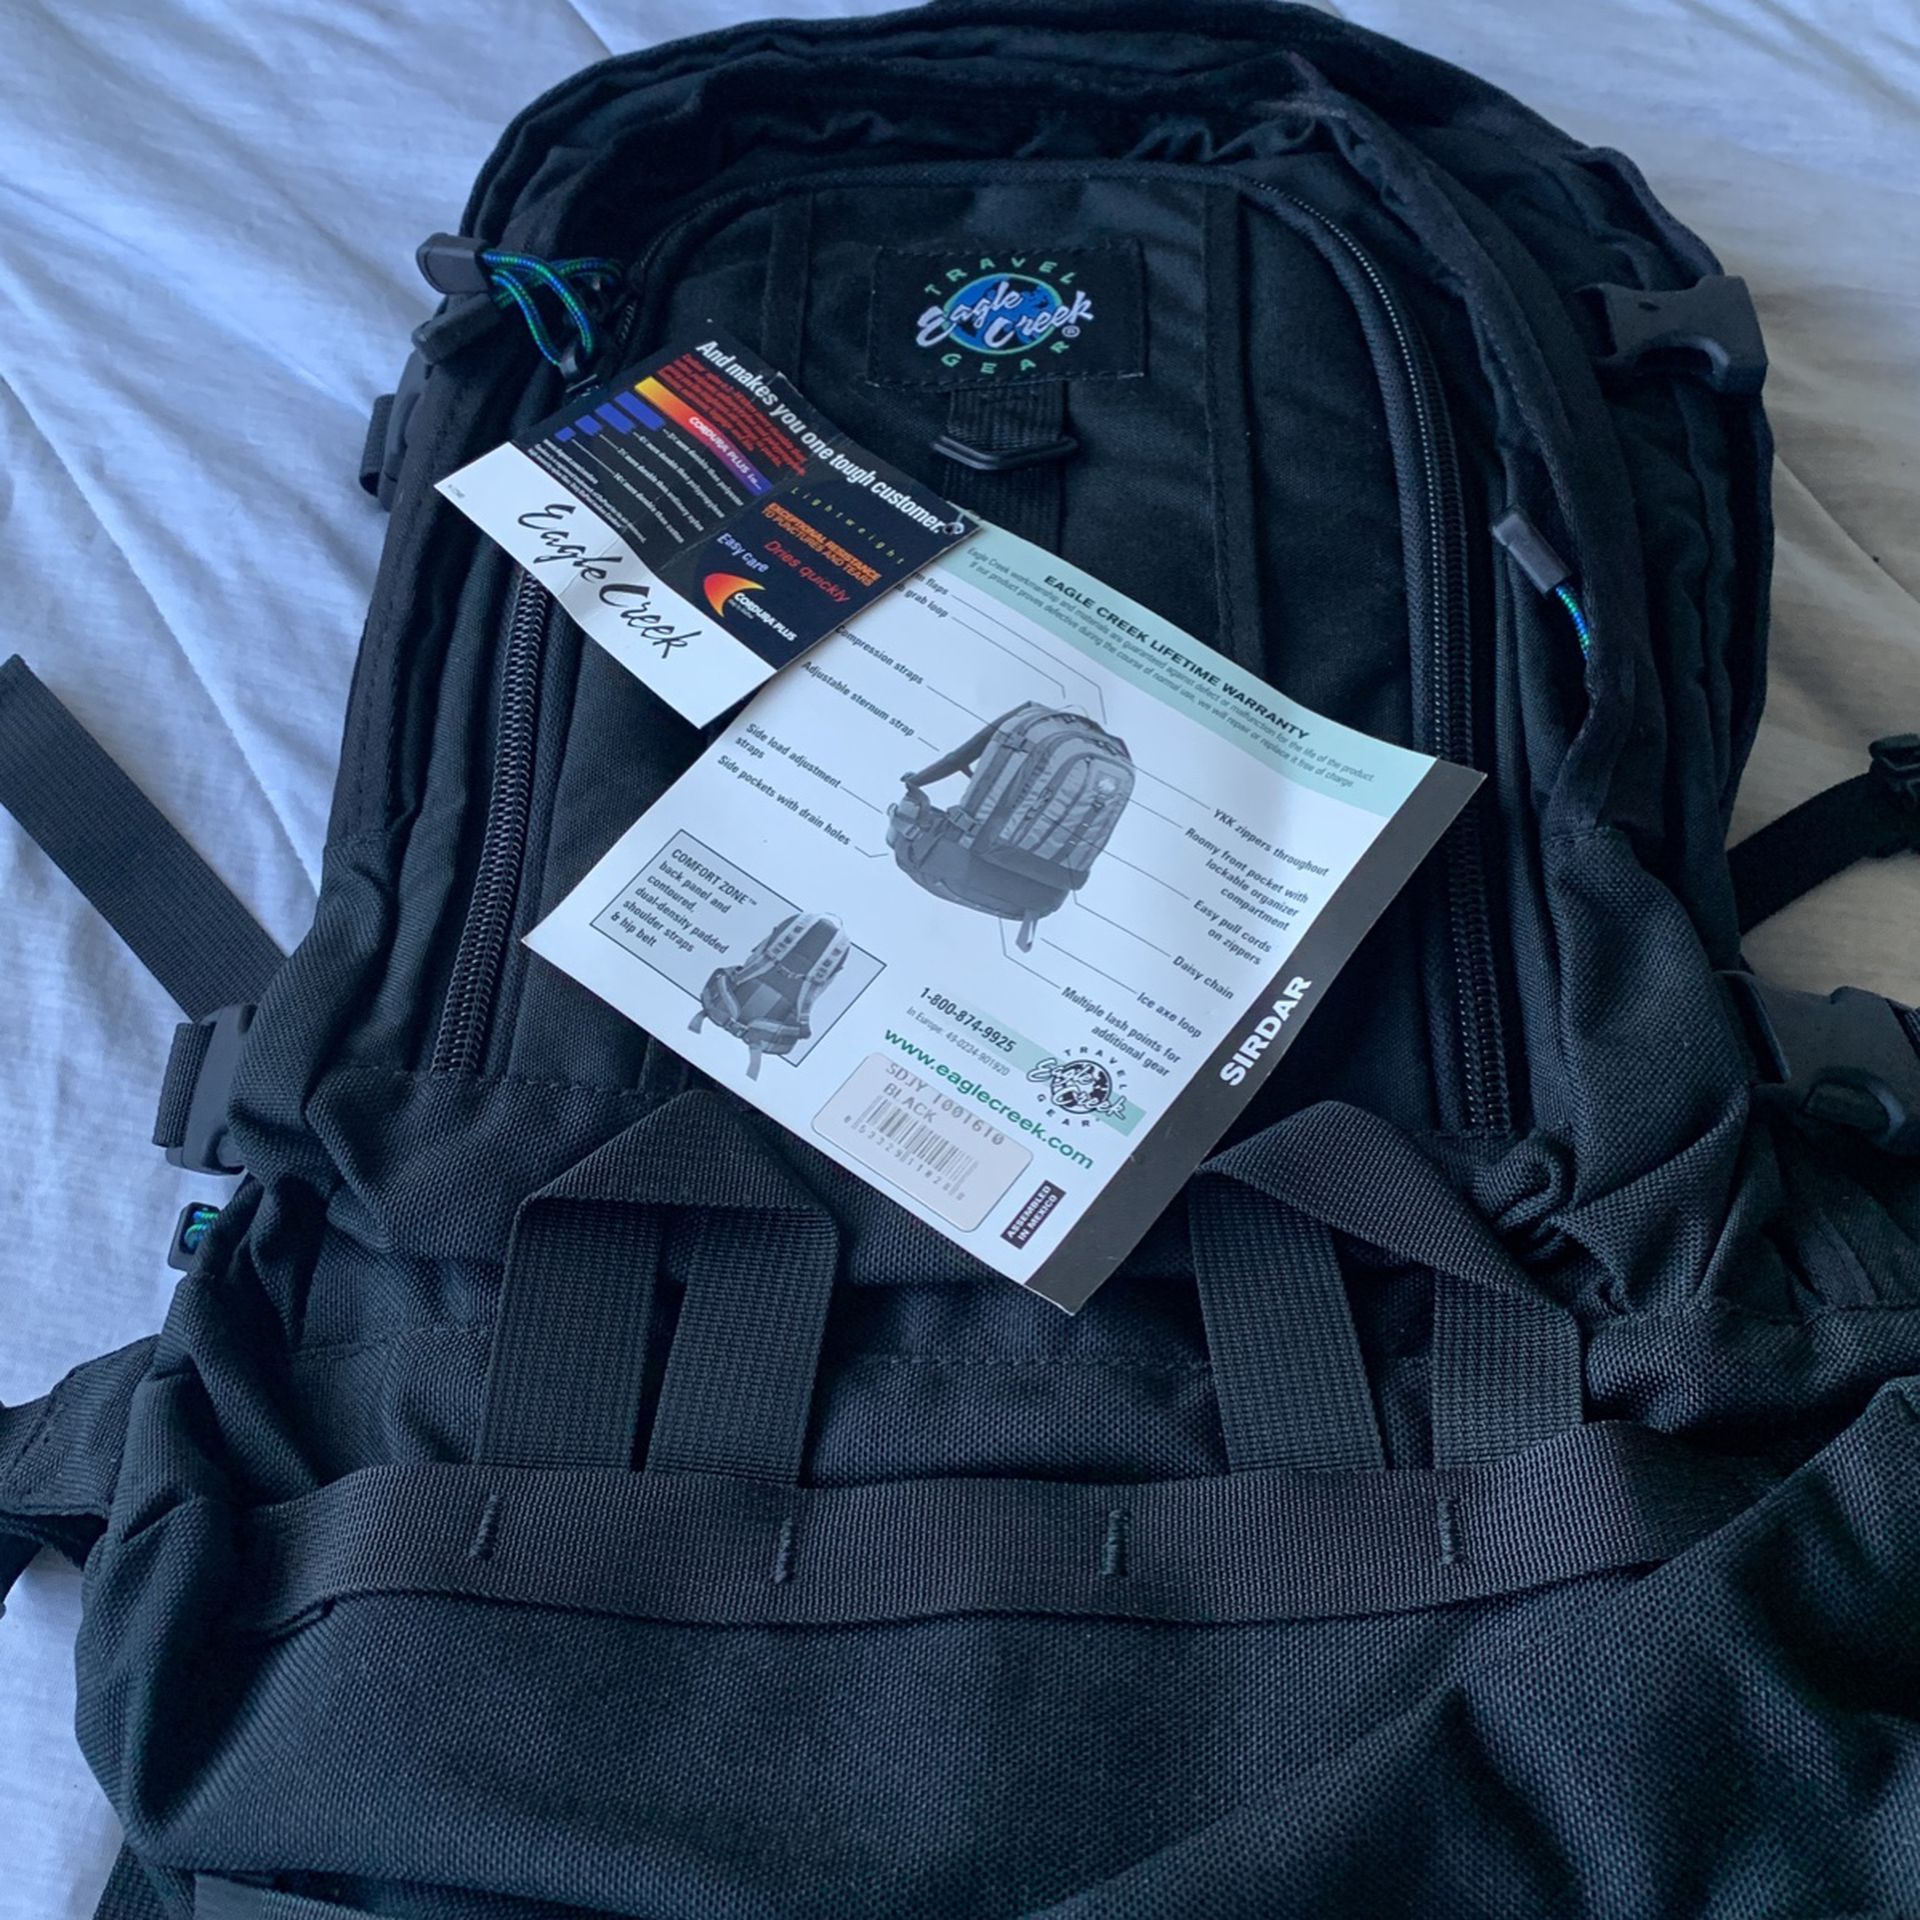 Eagle Creek Travel Gear Backpack